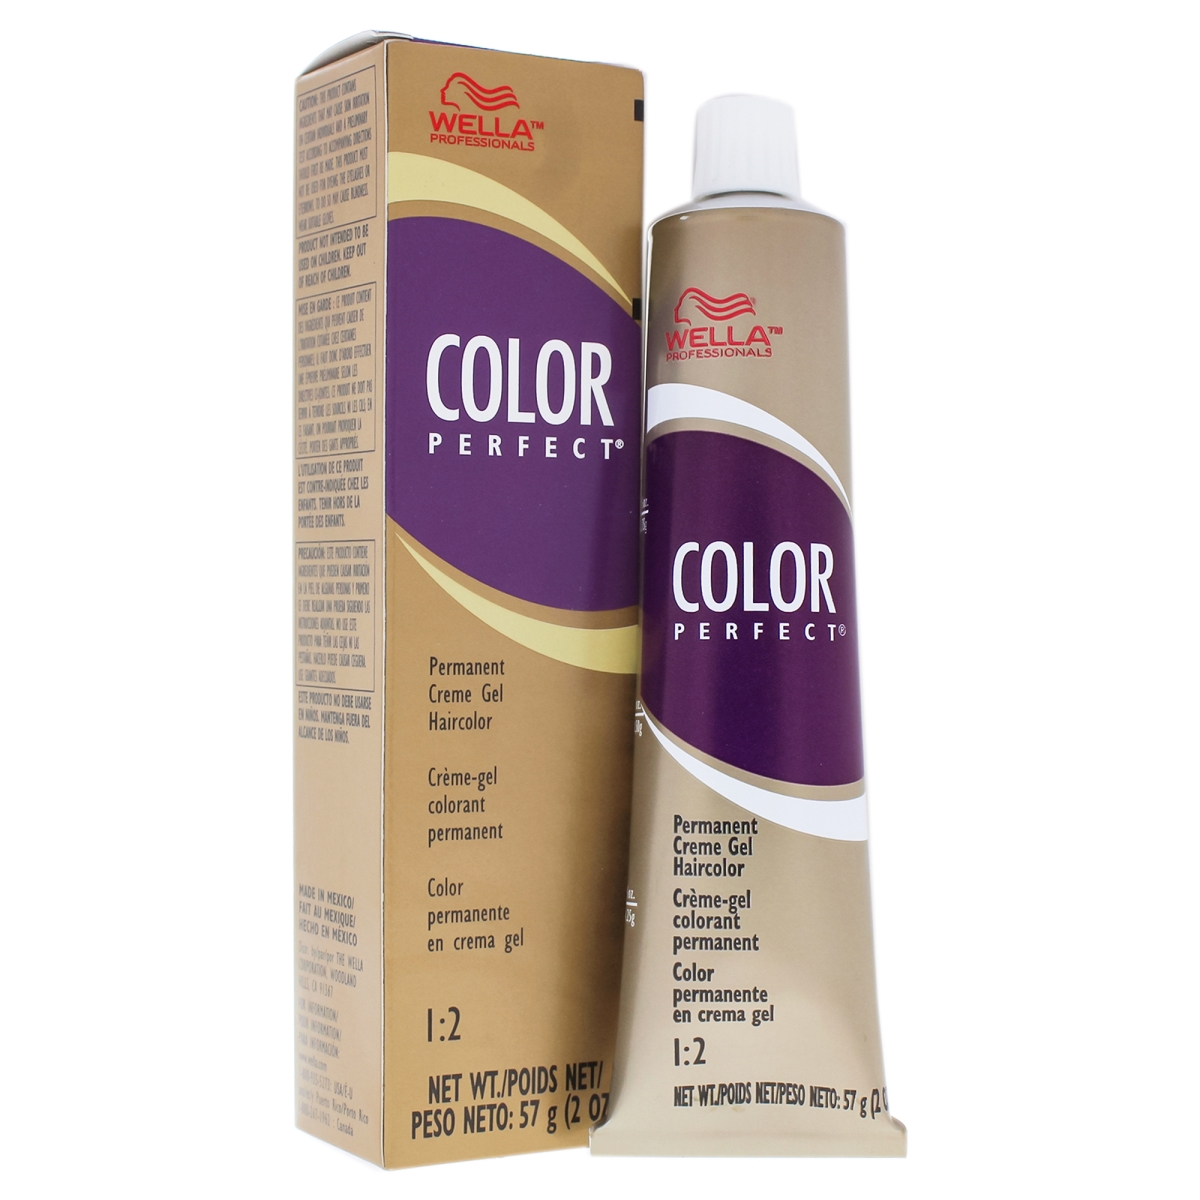 I0086915 Color Perfect Permanent Creme Gel Hair Color For Women - 4g Medium Golden Brown - 2 Oz